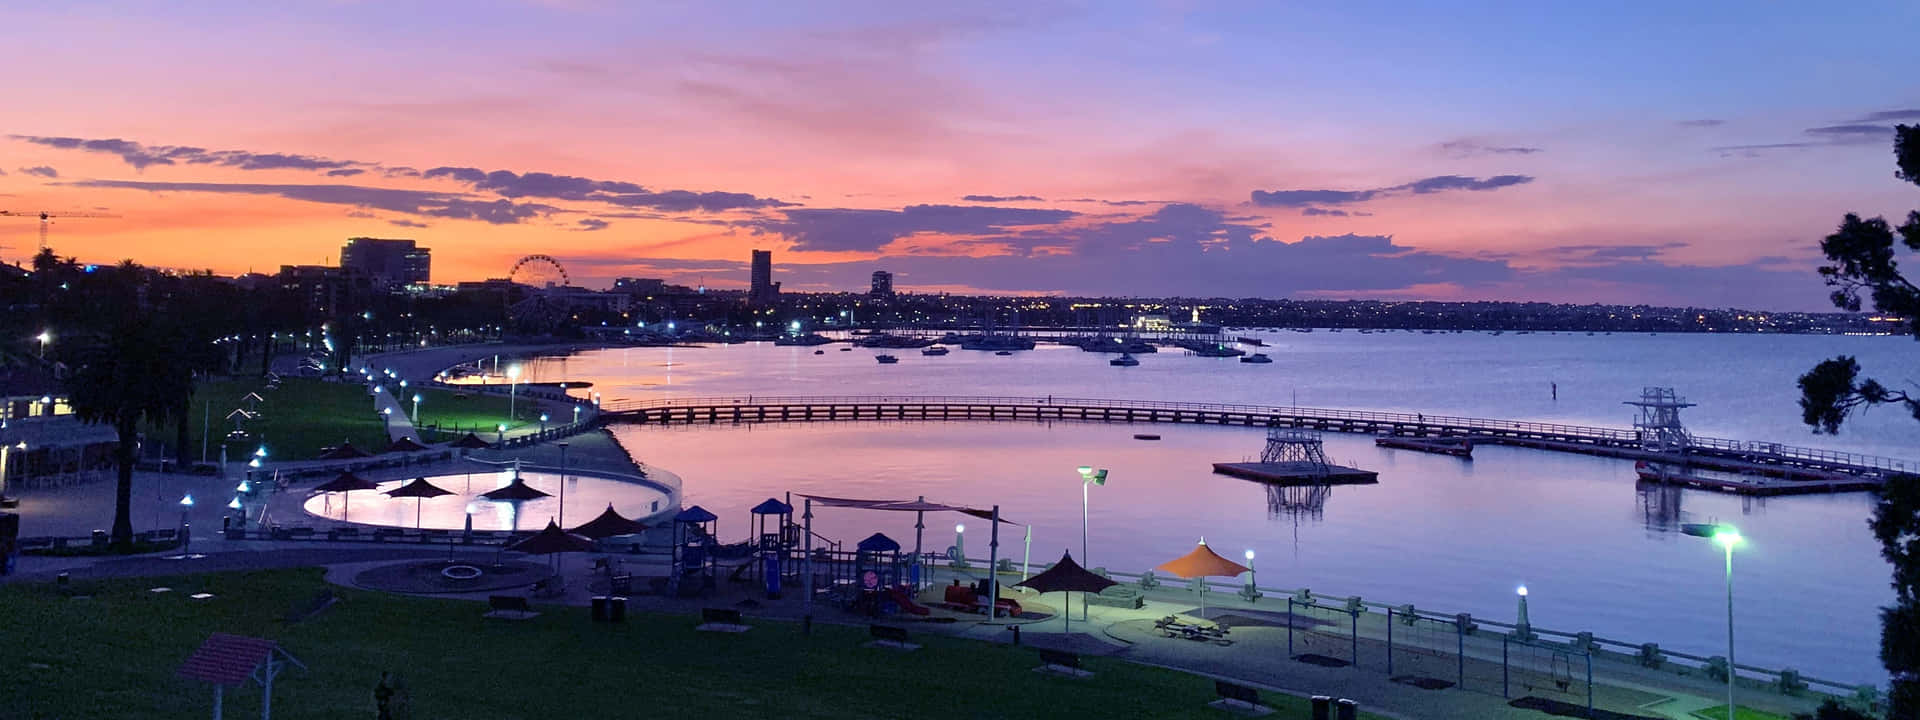 Stunning Sunrise Over Geelong Waterfront Wallpaper